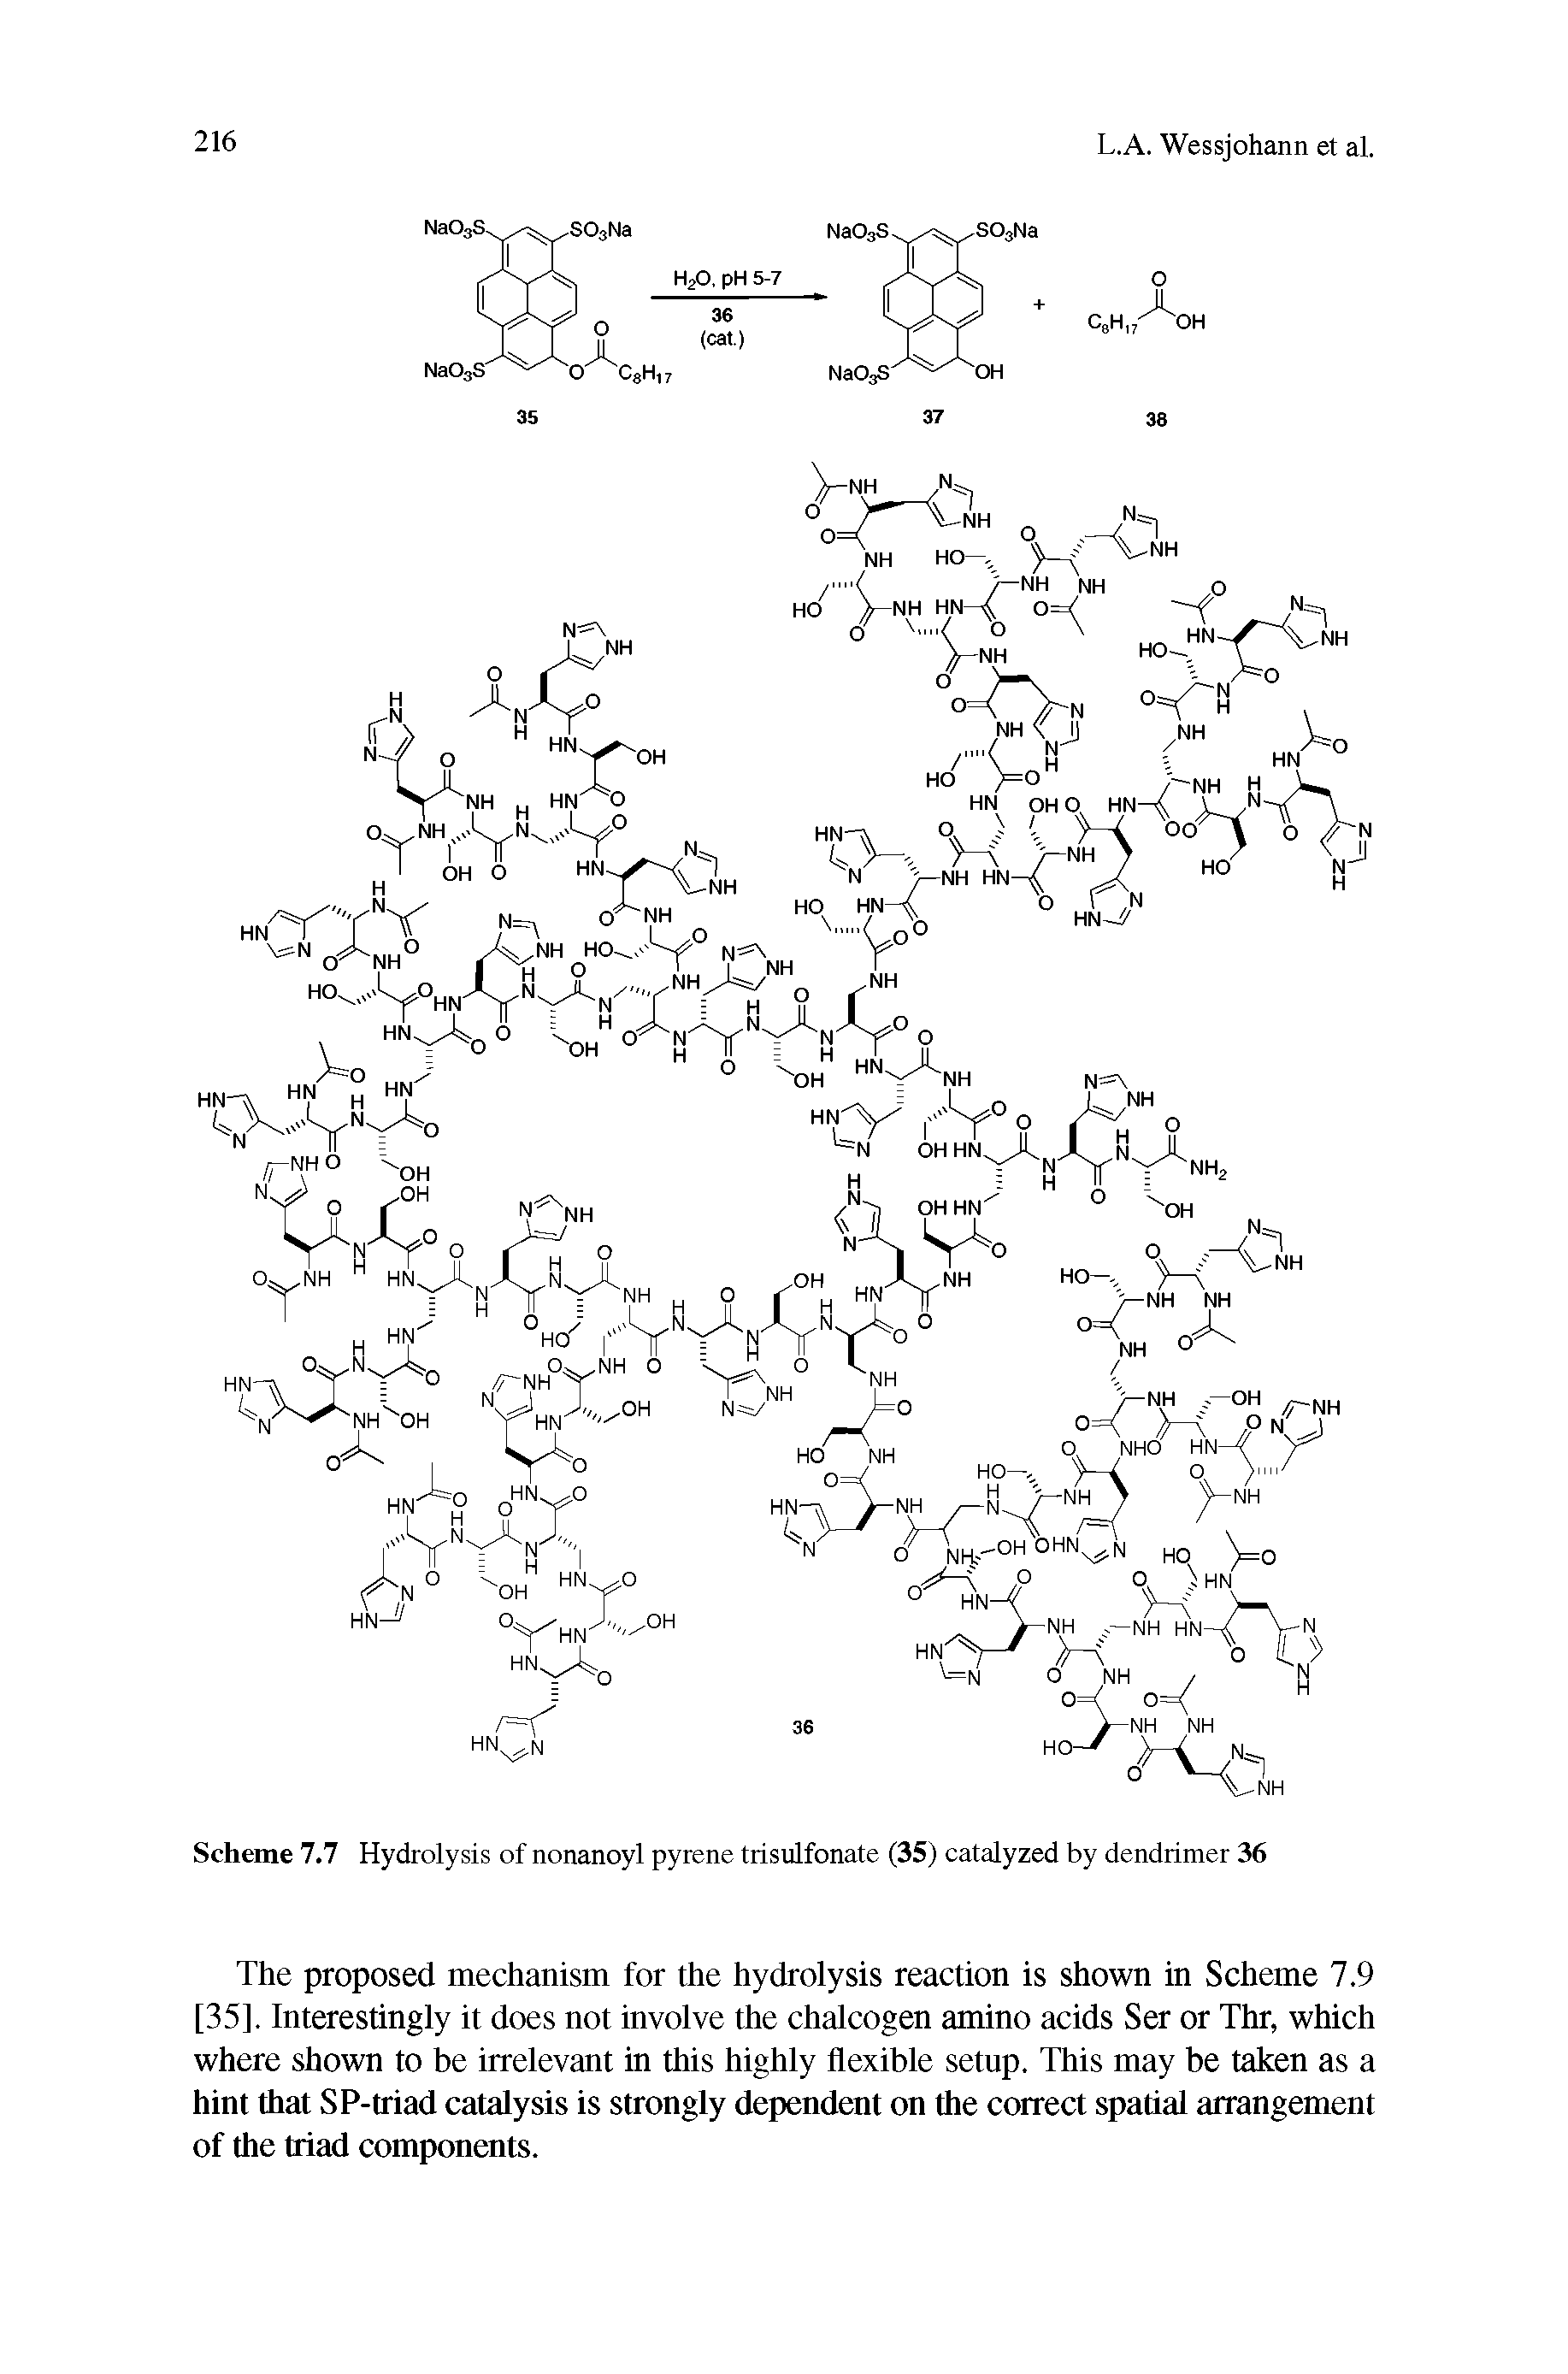 Scheme 7.7 Hydrolysis of nonanoyl pyrene trisulfonate (35) catalyzed by dendrimer 36...